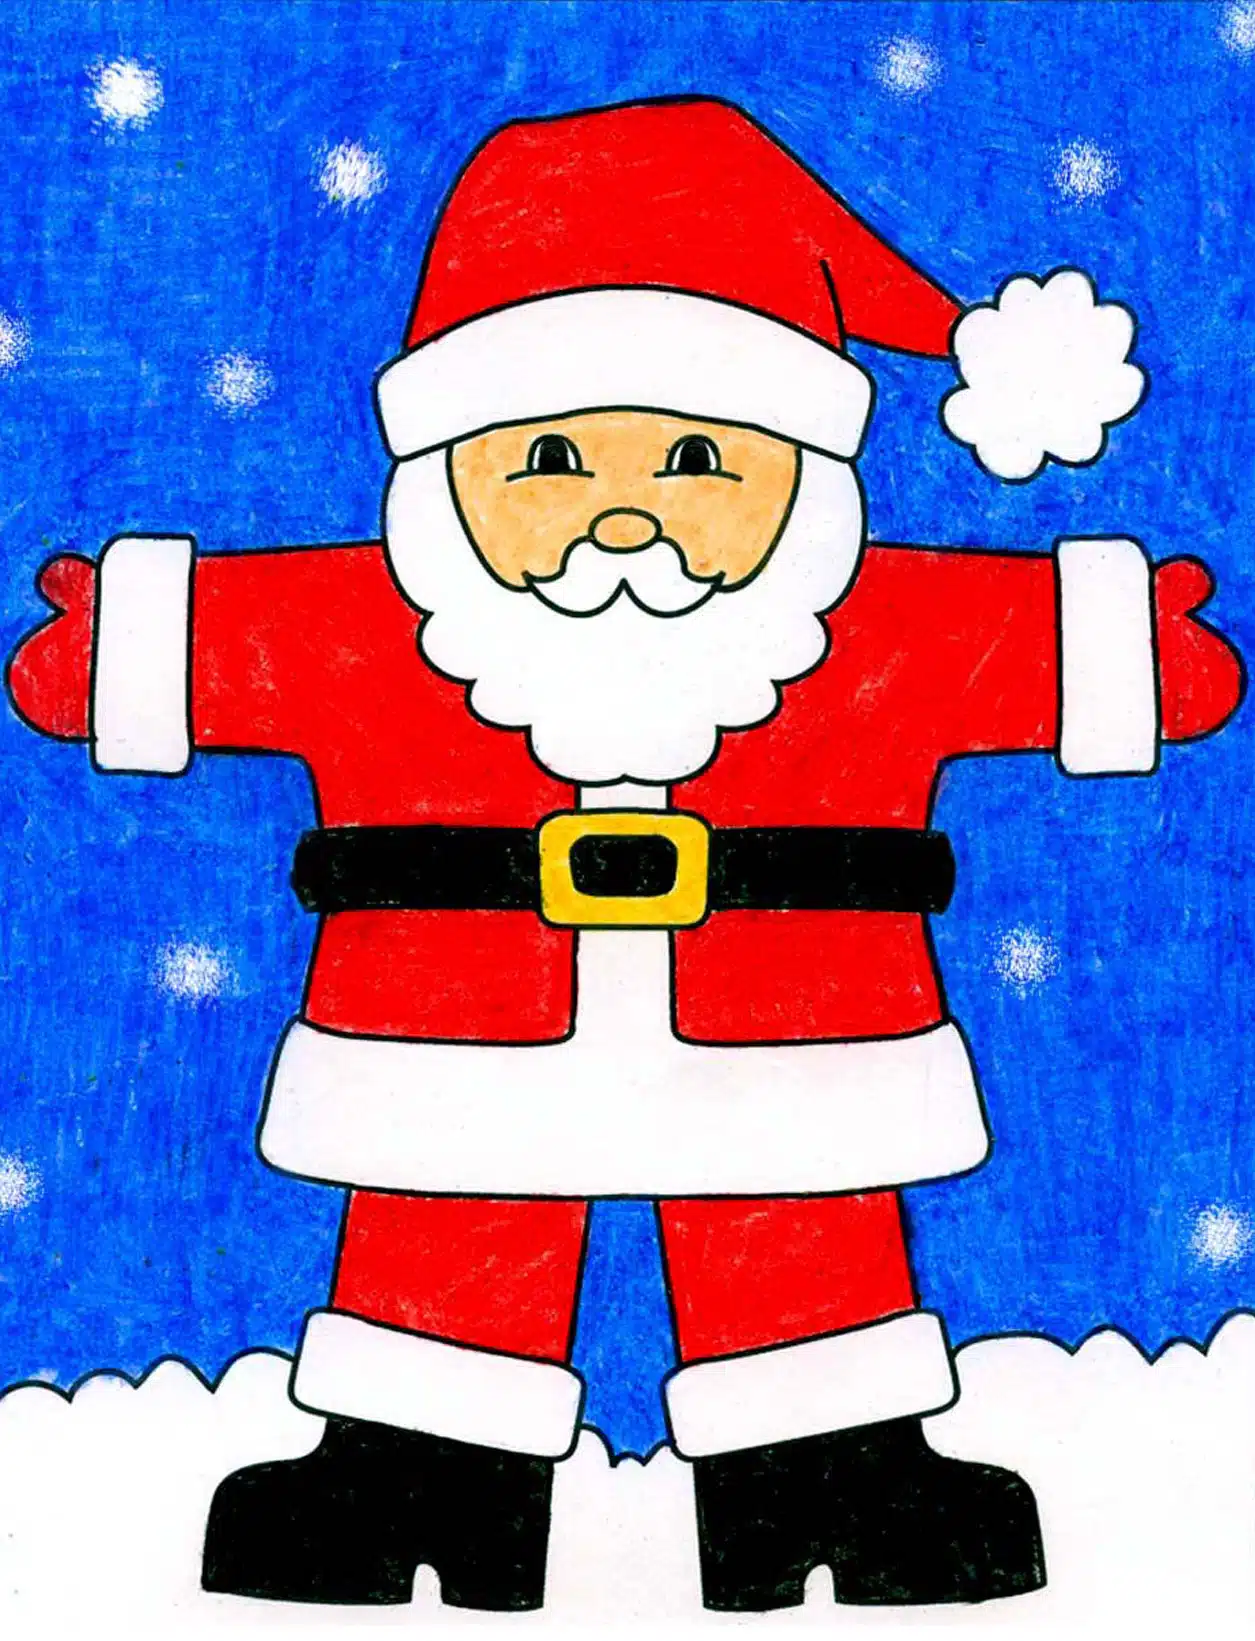 Christmas Santa Claus Portrait Drawing Canvas Print by Patrick's Art - Fy-saigonsouth.com.vn